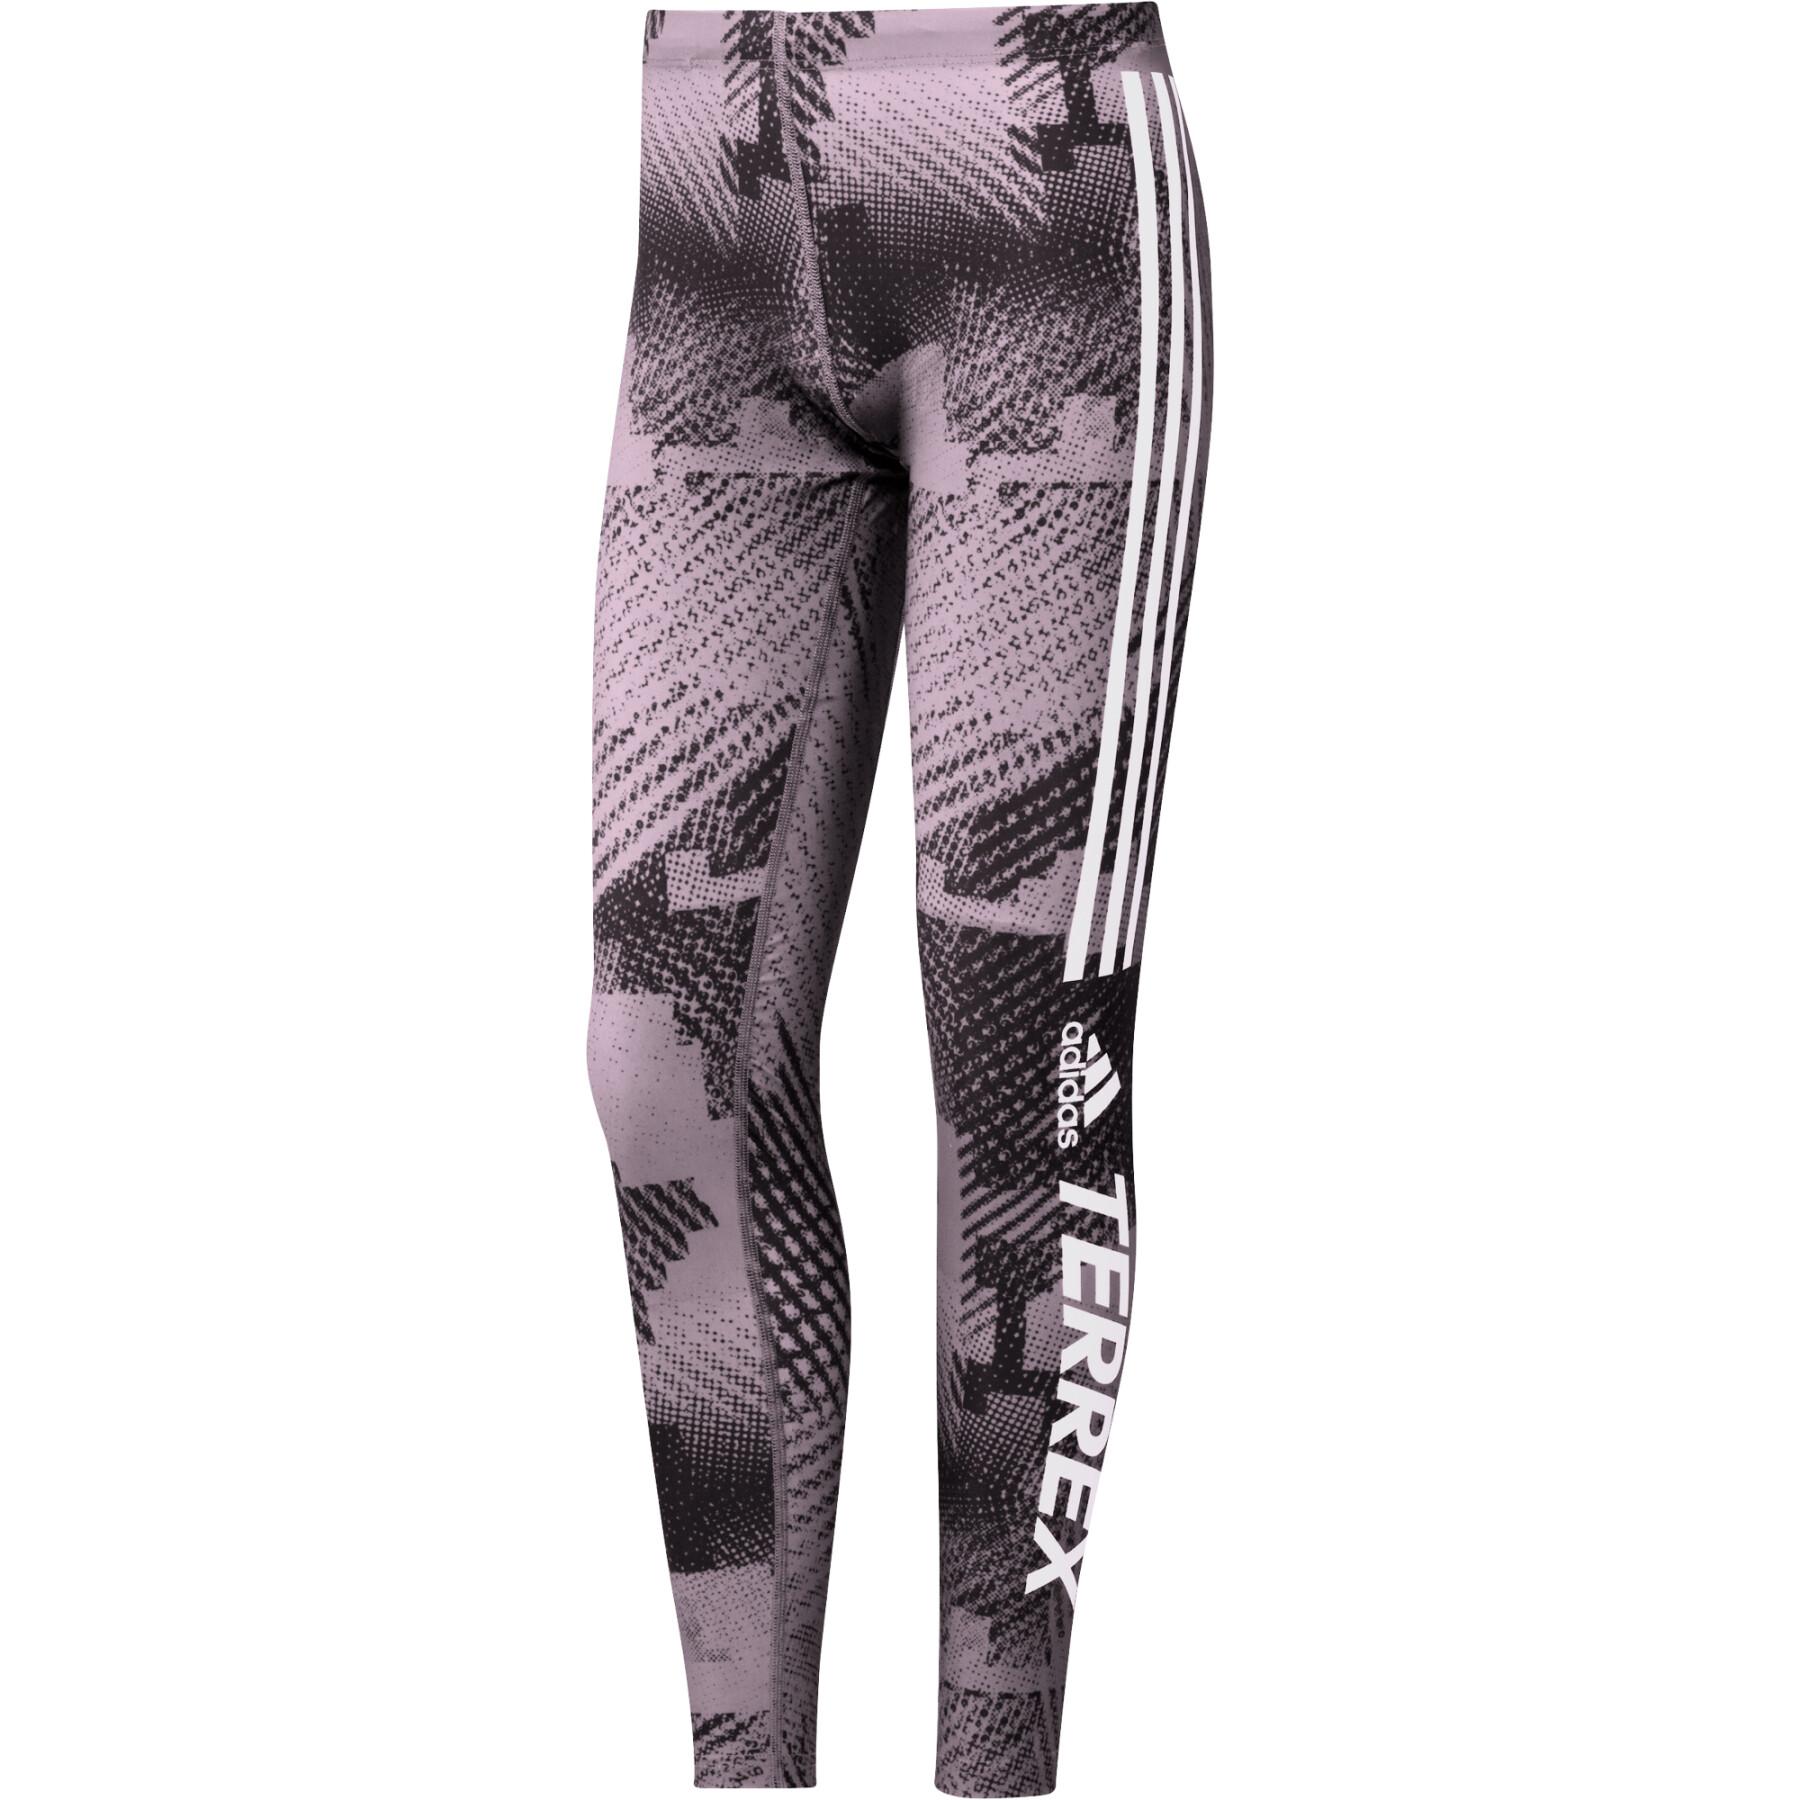 Xpr xc race basketball leggings - Adidas Originals - Women